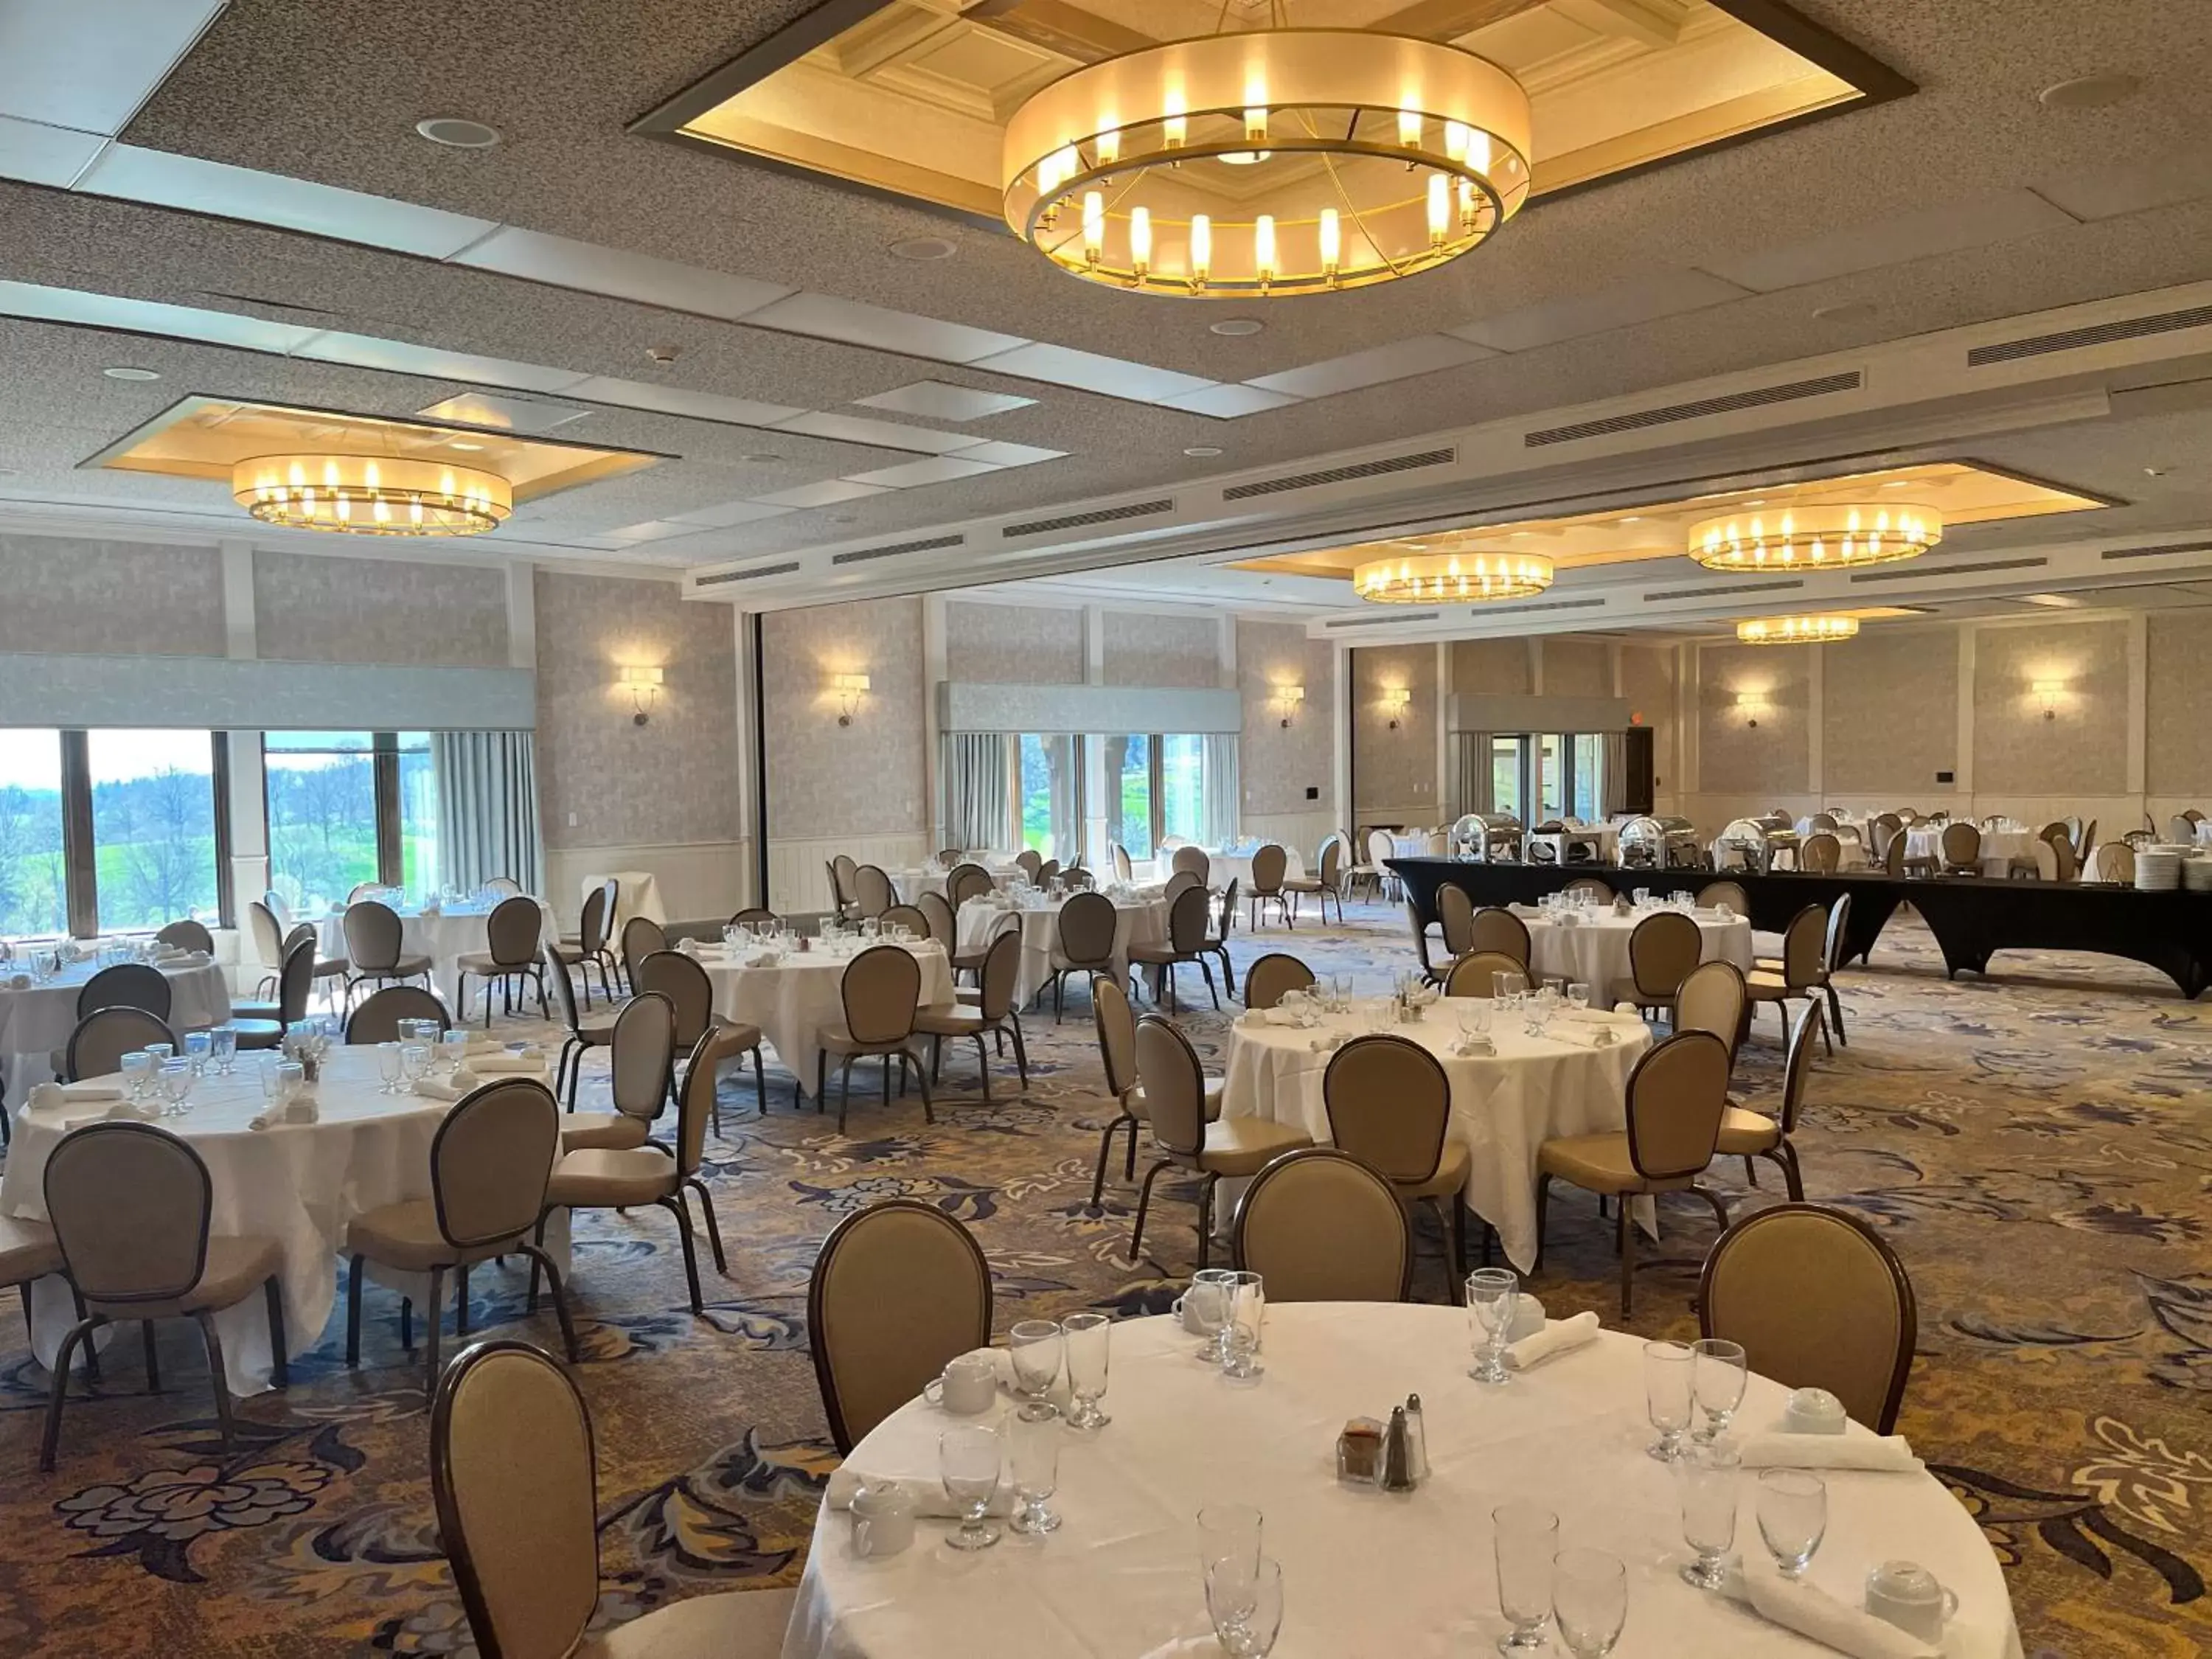 Meeting/conference room, Banquet Facilities in Oglebay Resort